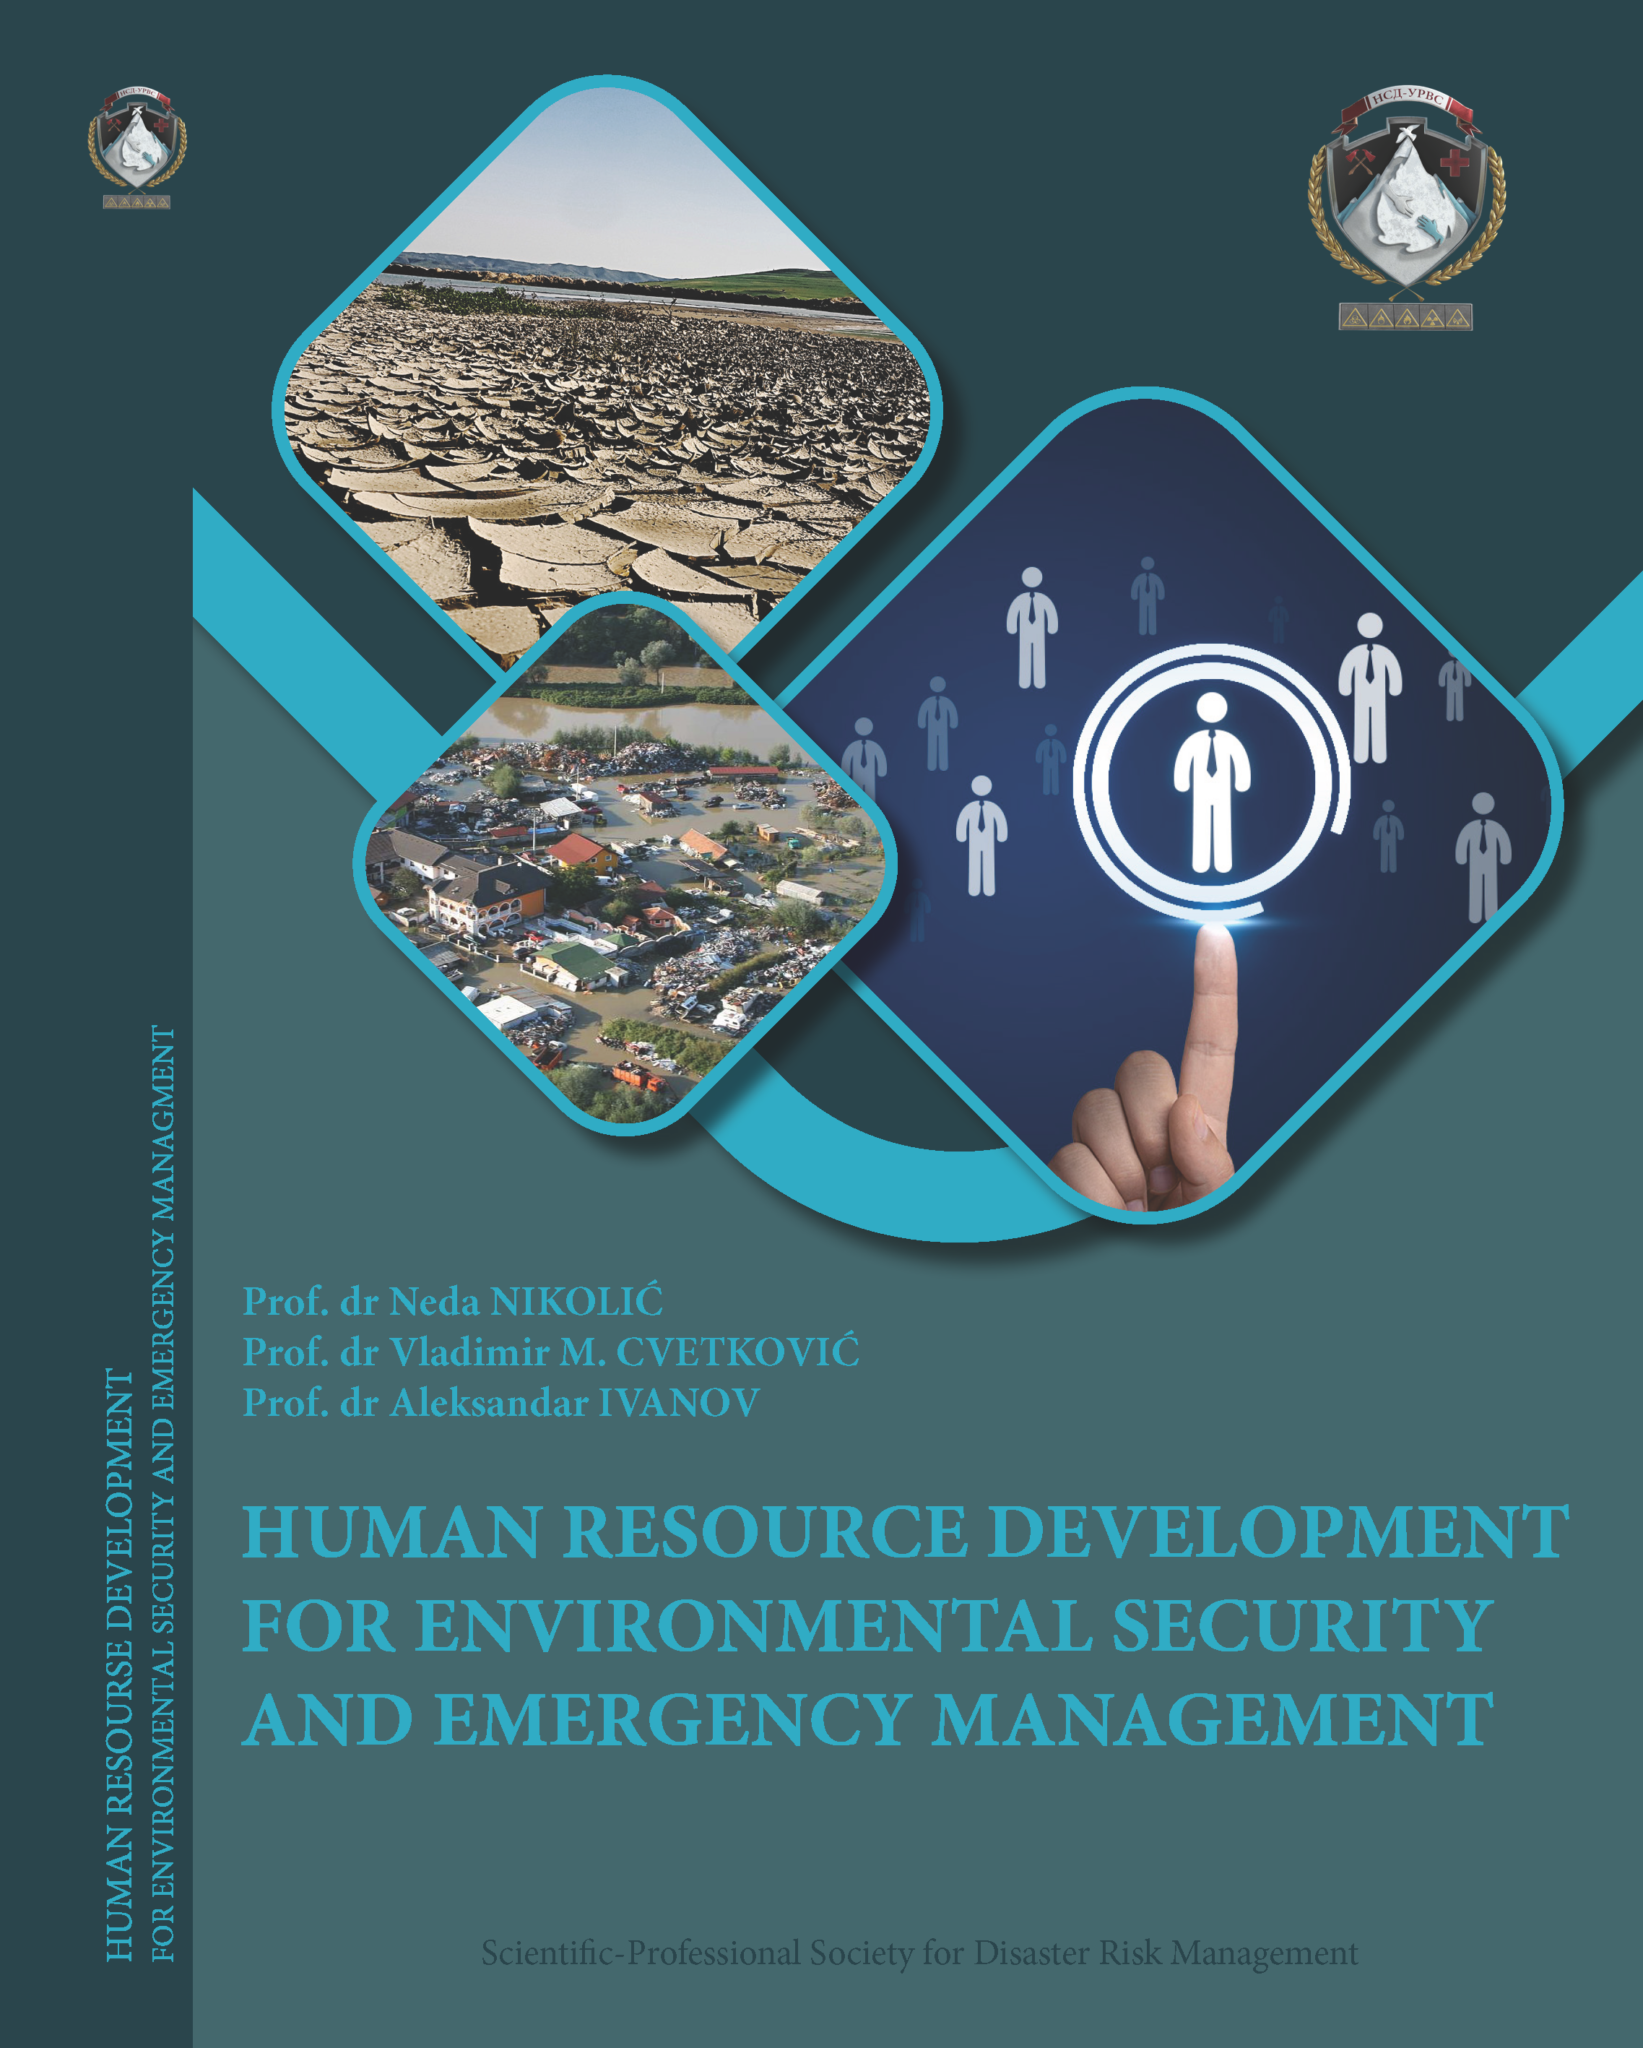 Nikolić, N., Cvetković, M.V., Ivanov, A. (2023). Human resource development for environmental security and emergency management. Belgrade: Scientific-Professional Society for Disaster Risk Management.